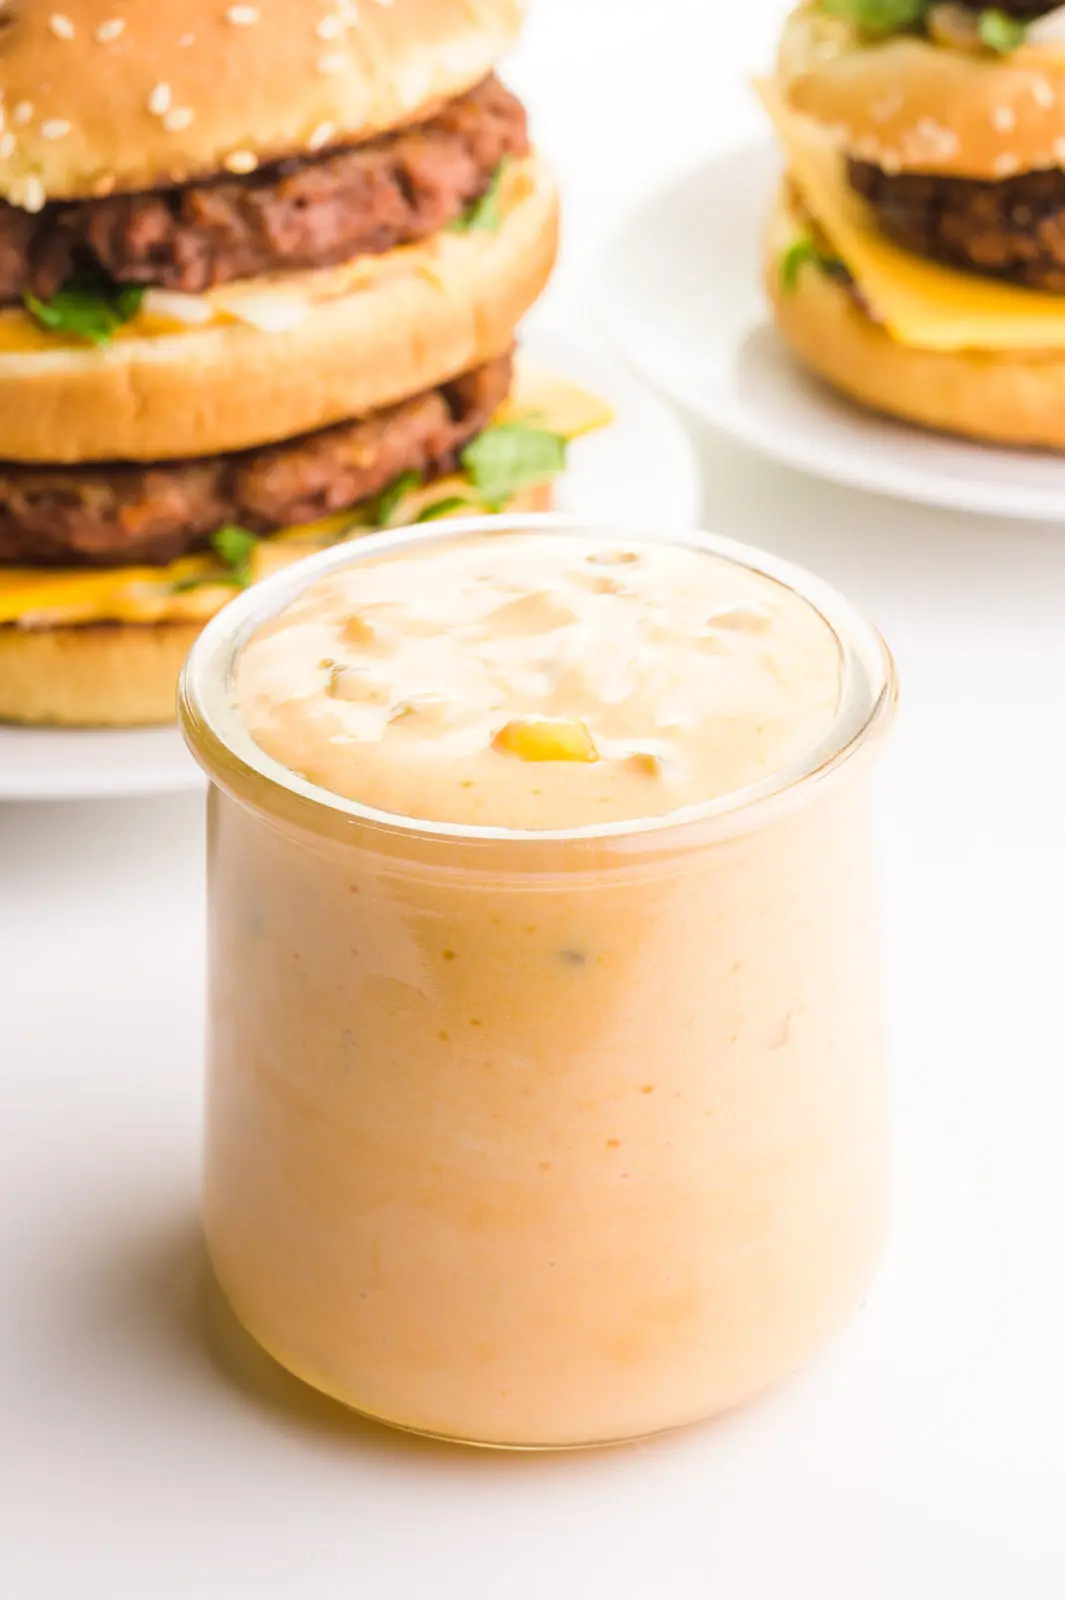 A glass jar of vegan Big Mac special sauce sits in front of two homemade vegan Big Mac burgers.